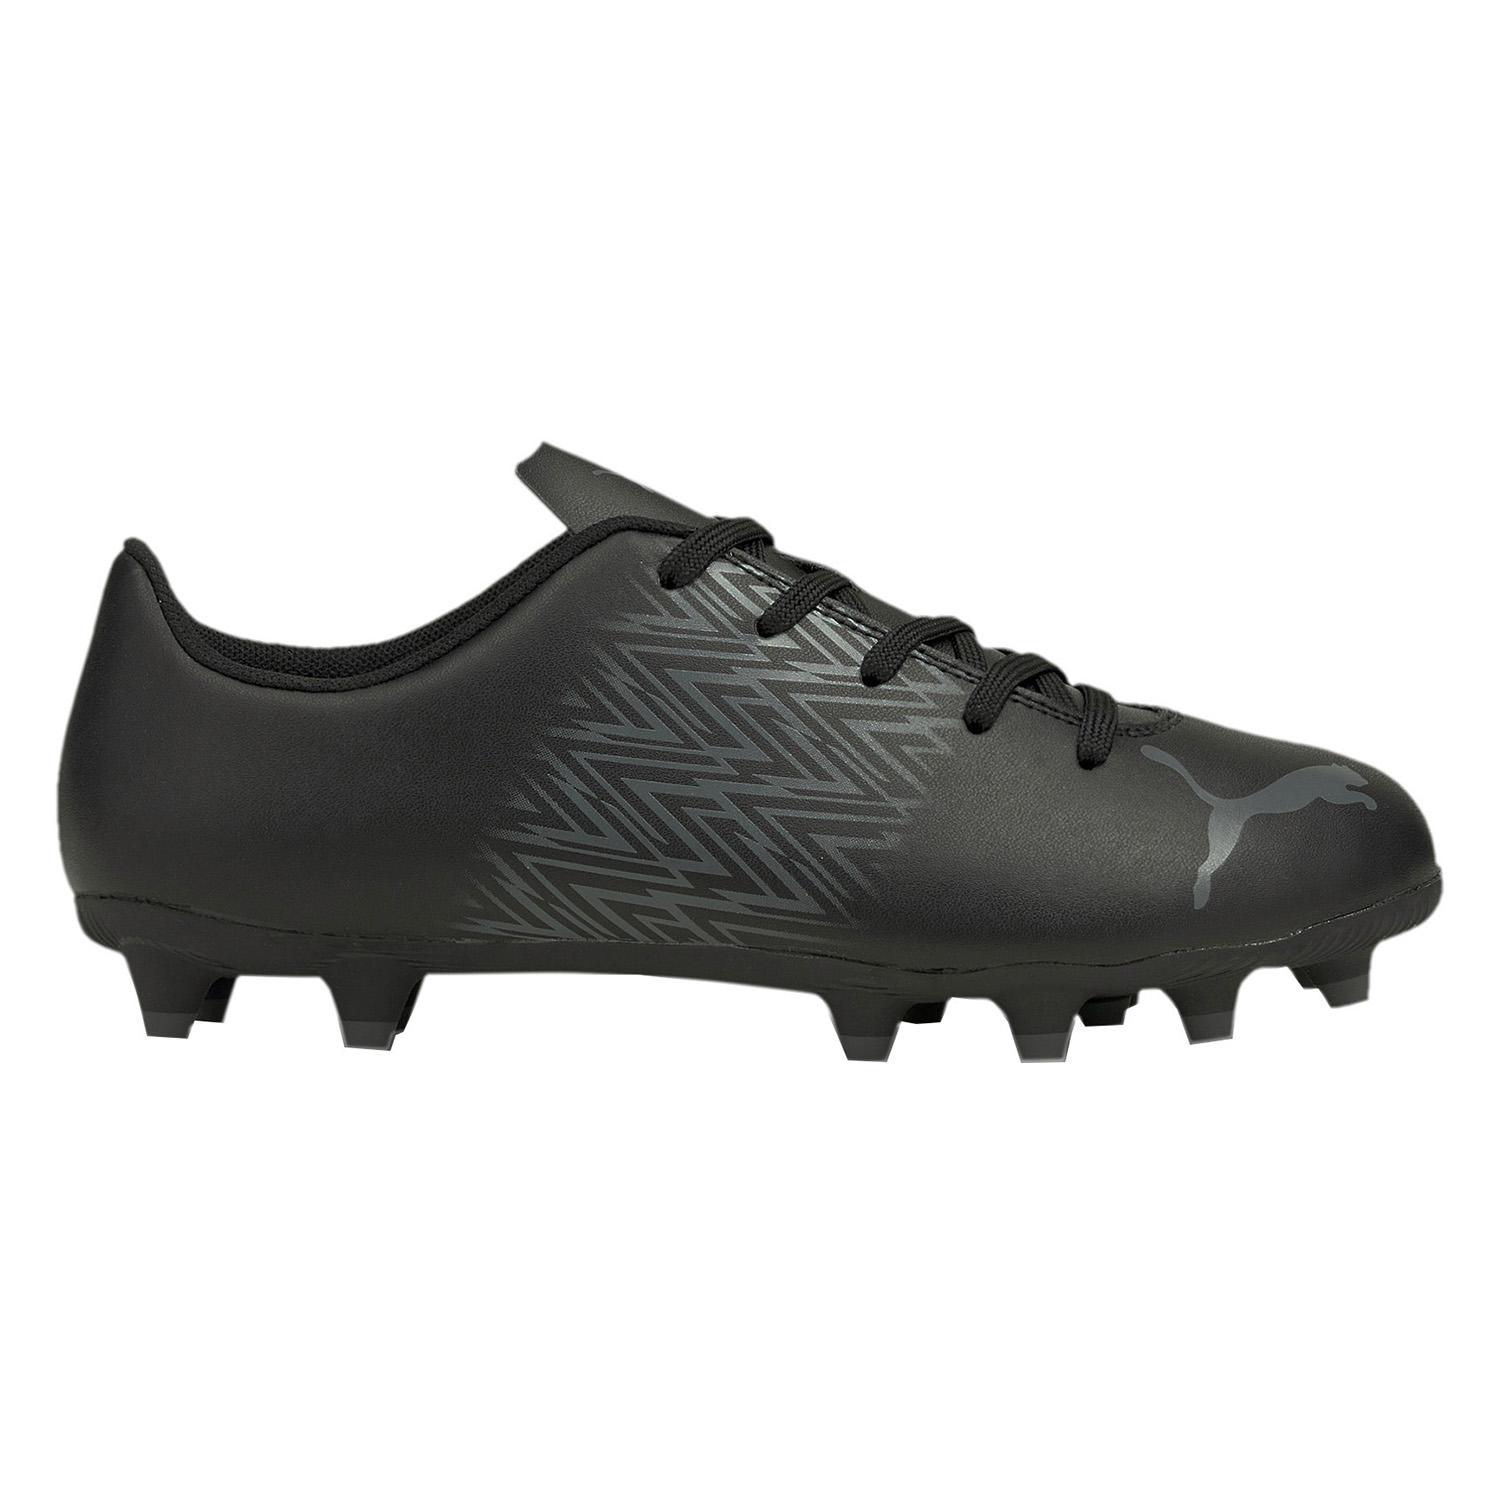 Football/Soccer Boots